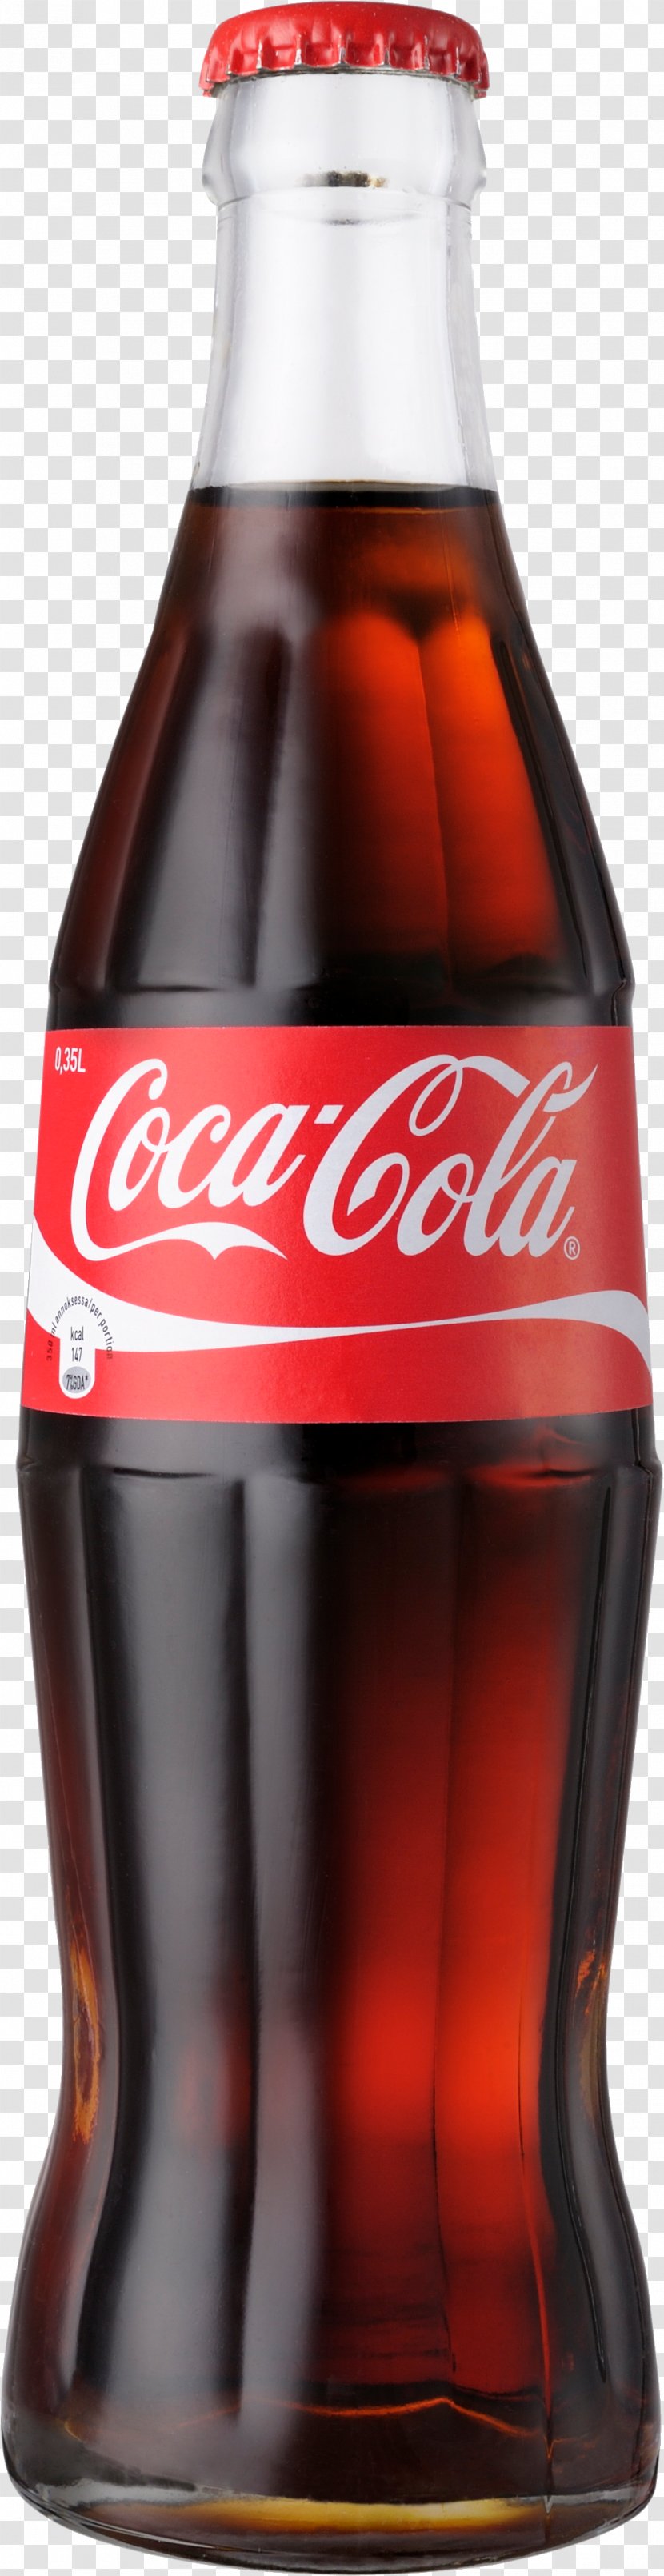 Coca-Cola Soft Drink Diet Coke - Caffeine Free Coca Cola - Bottle Image Transparent PNG